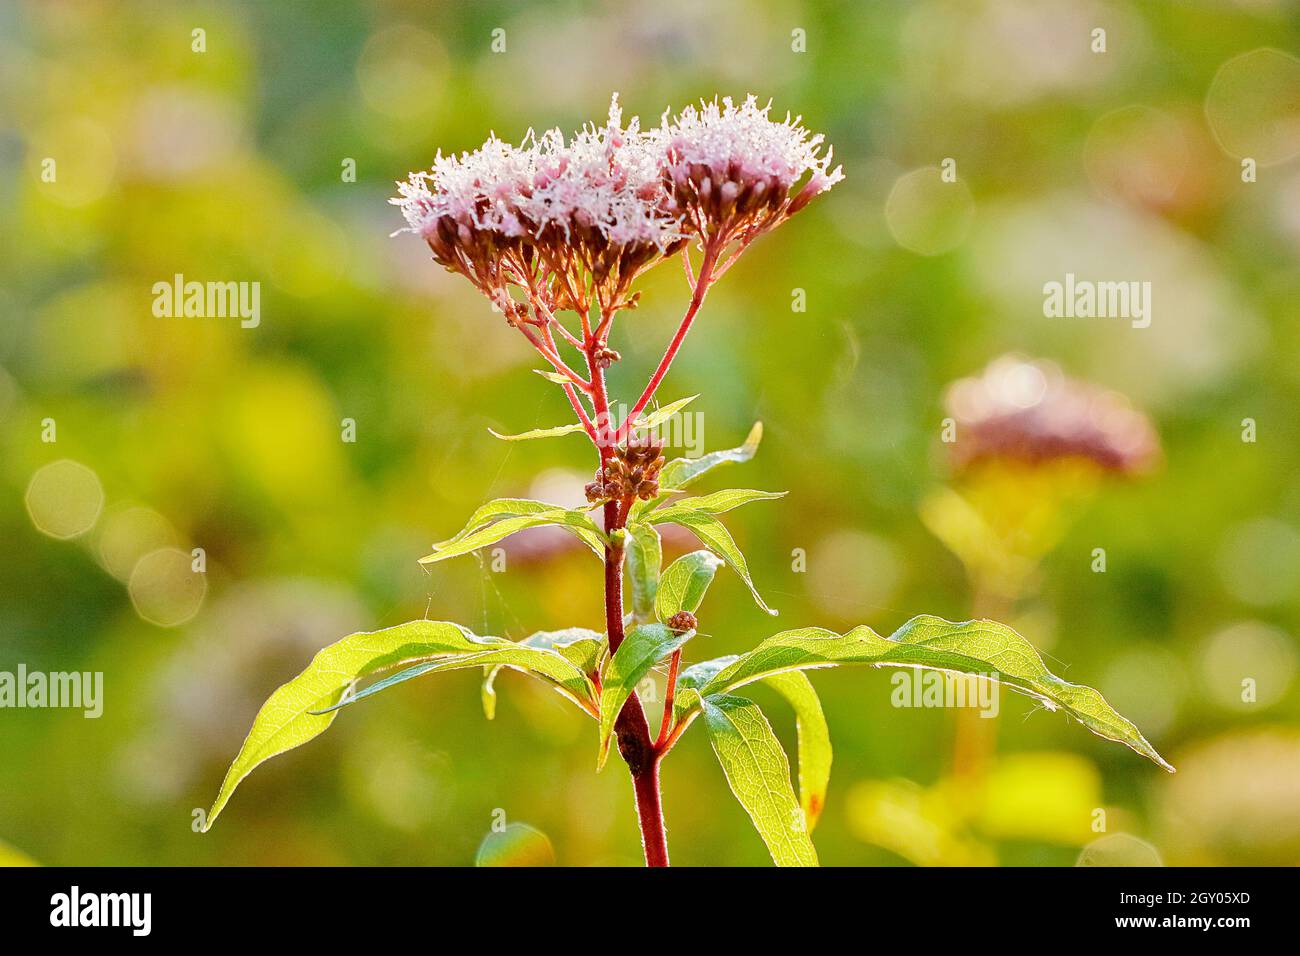 hemp-agrimony, common hemp agrimony (Eupatorium cannabinum), blooming in sunlight, Germany, North Rhine-Westphalia Stock Photo